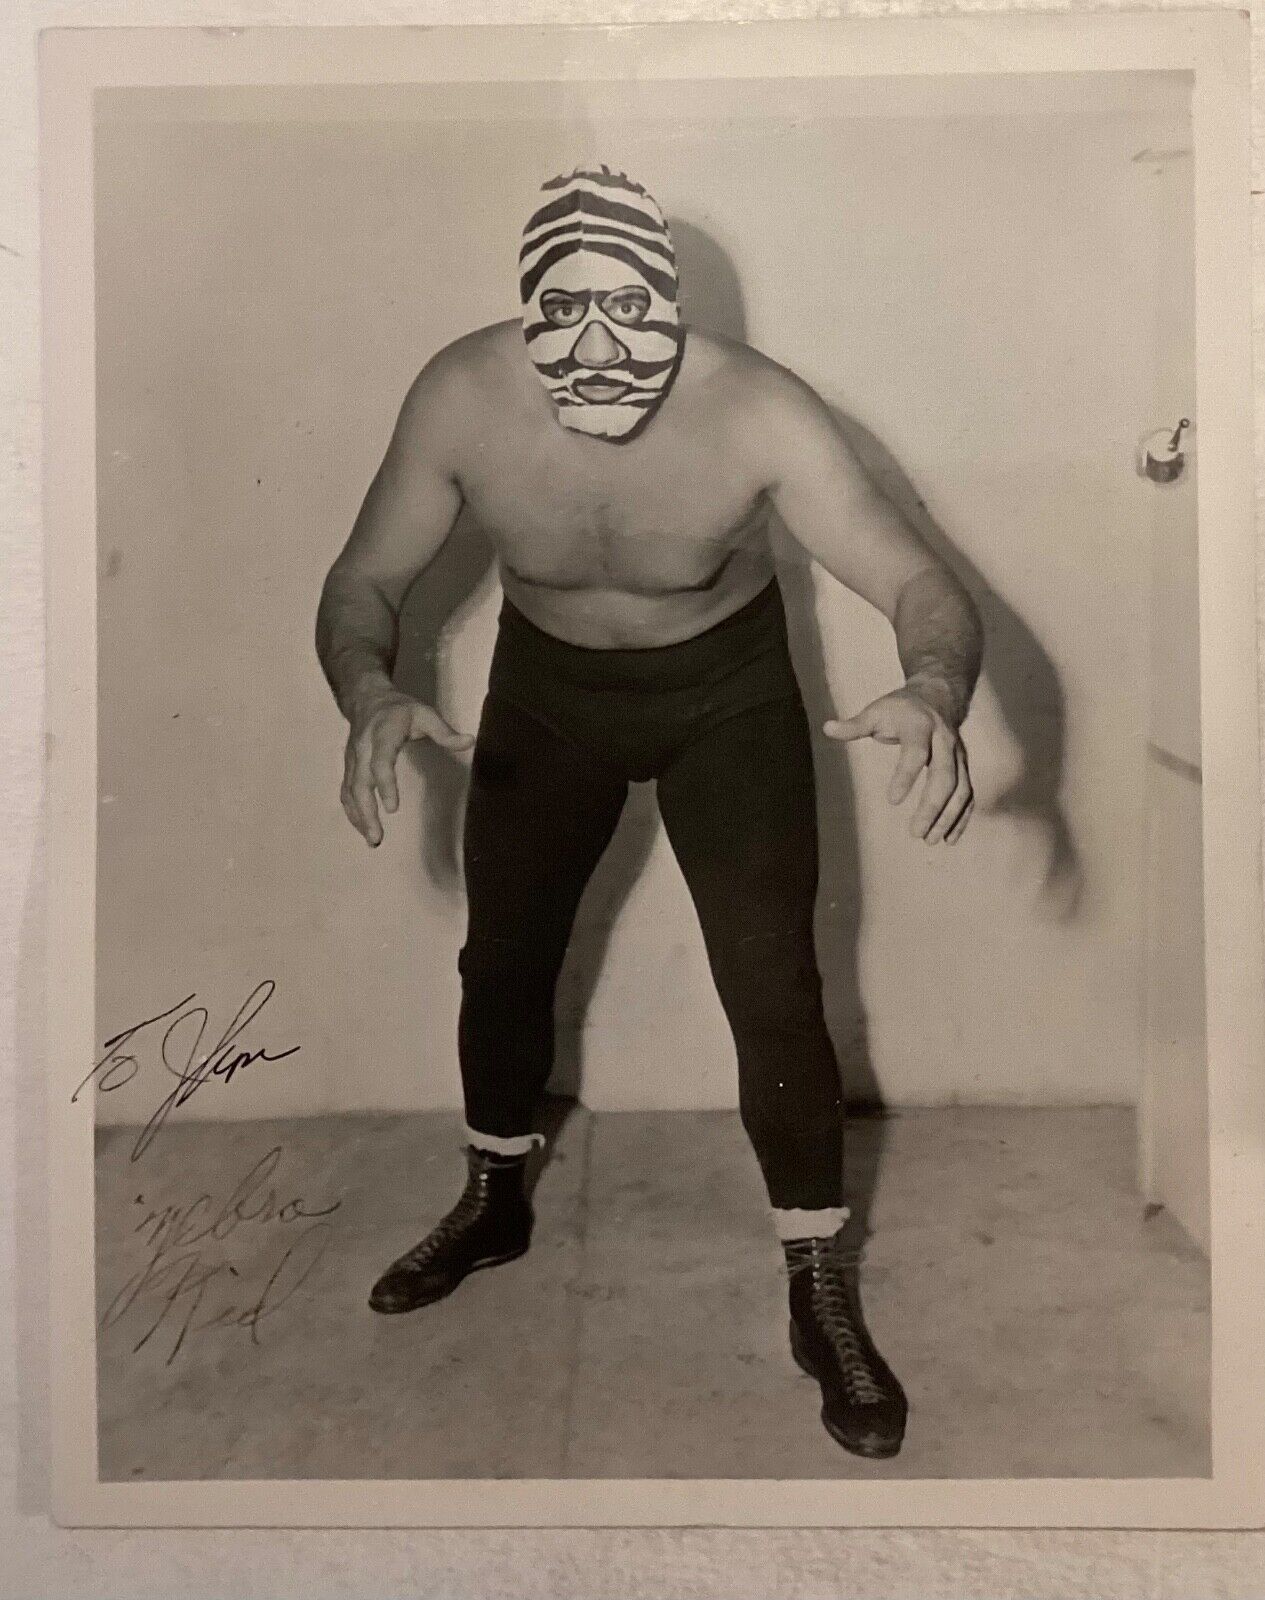 Press Photo -  The Zebra Kid wrestler - B&W   8” x 10”